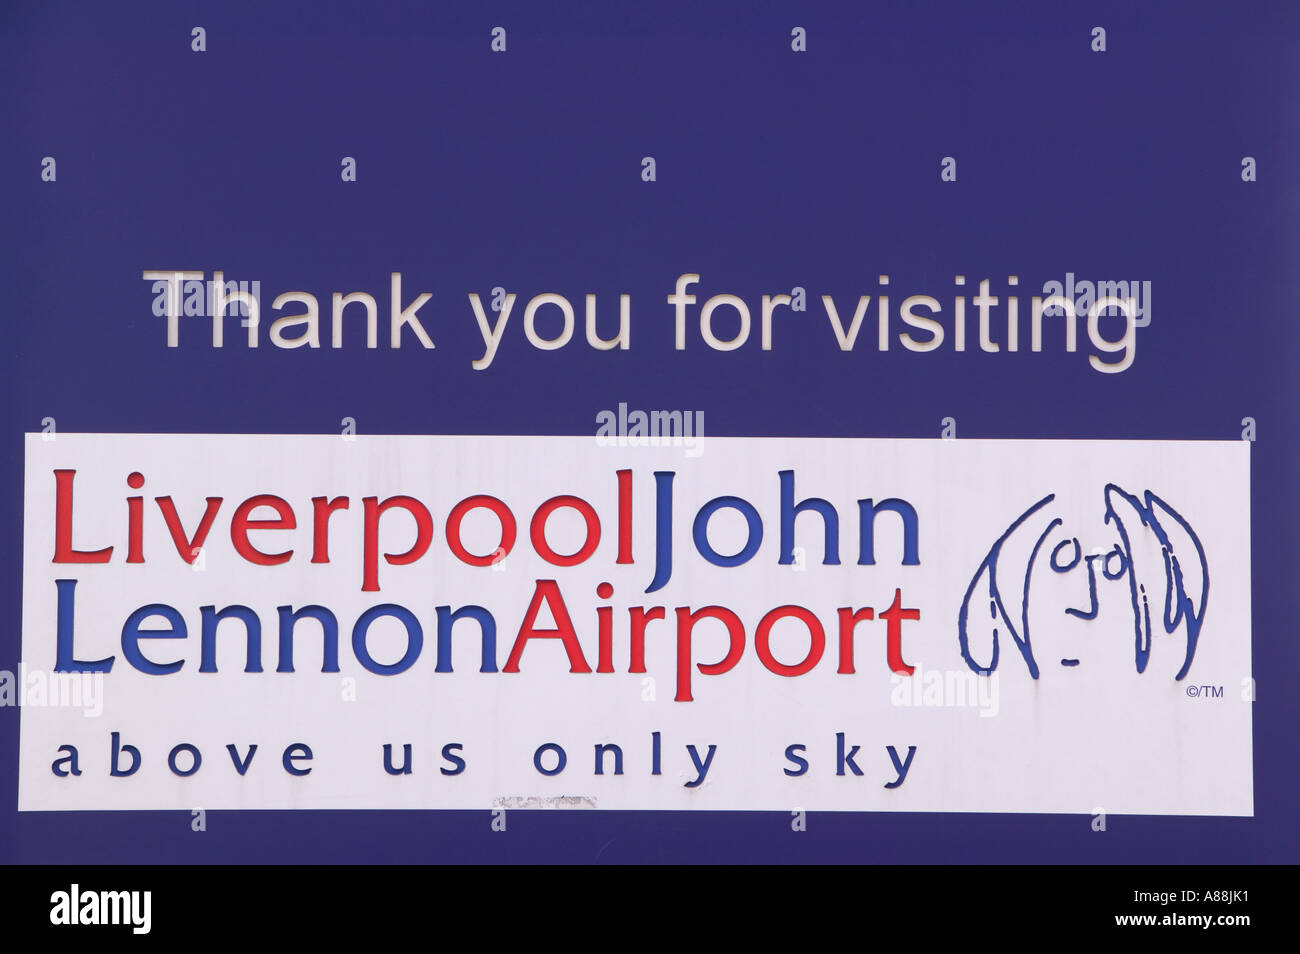 John Lennon airport, Liverpool, England Stock Photo